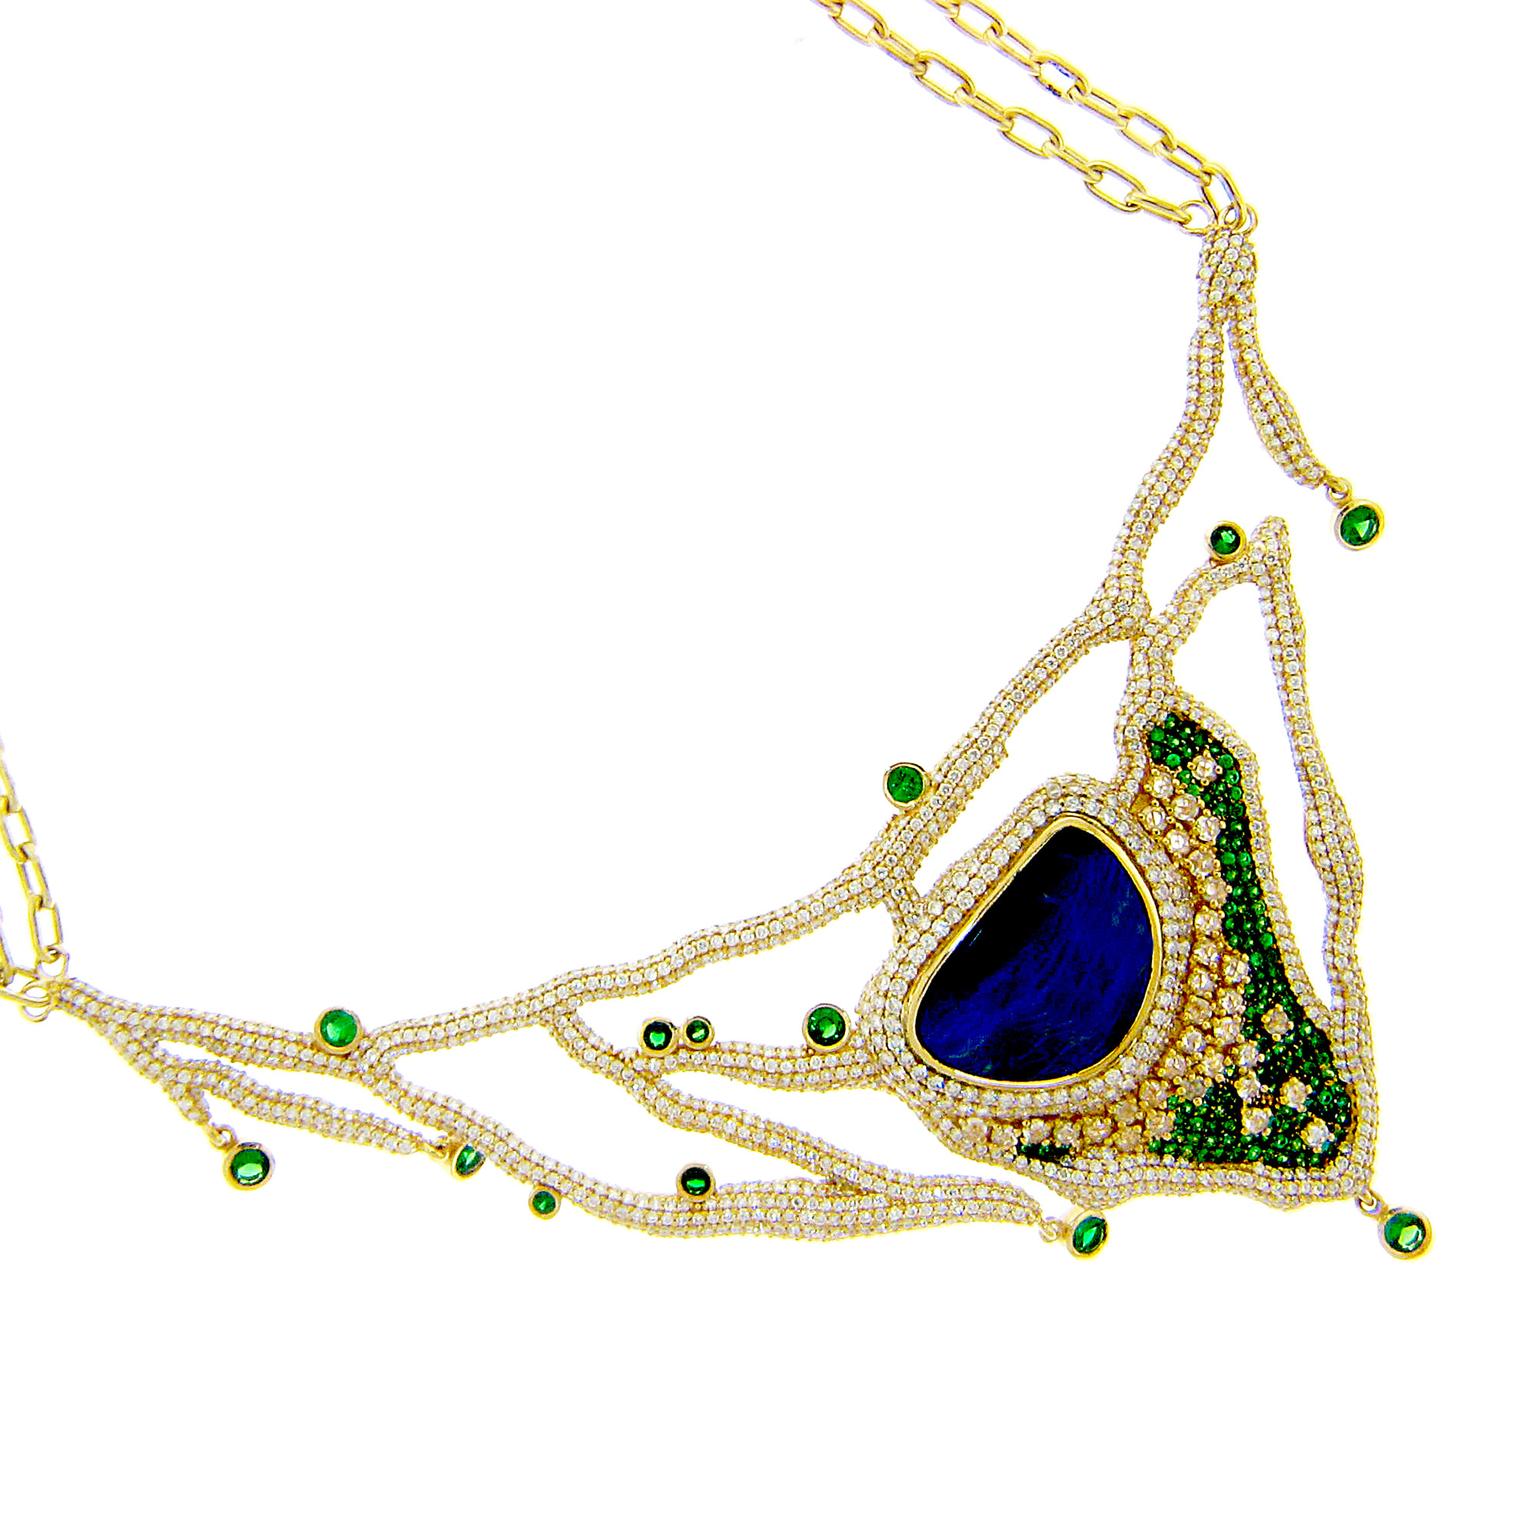 Michael John opal necklace